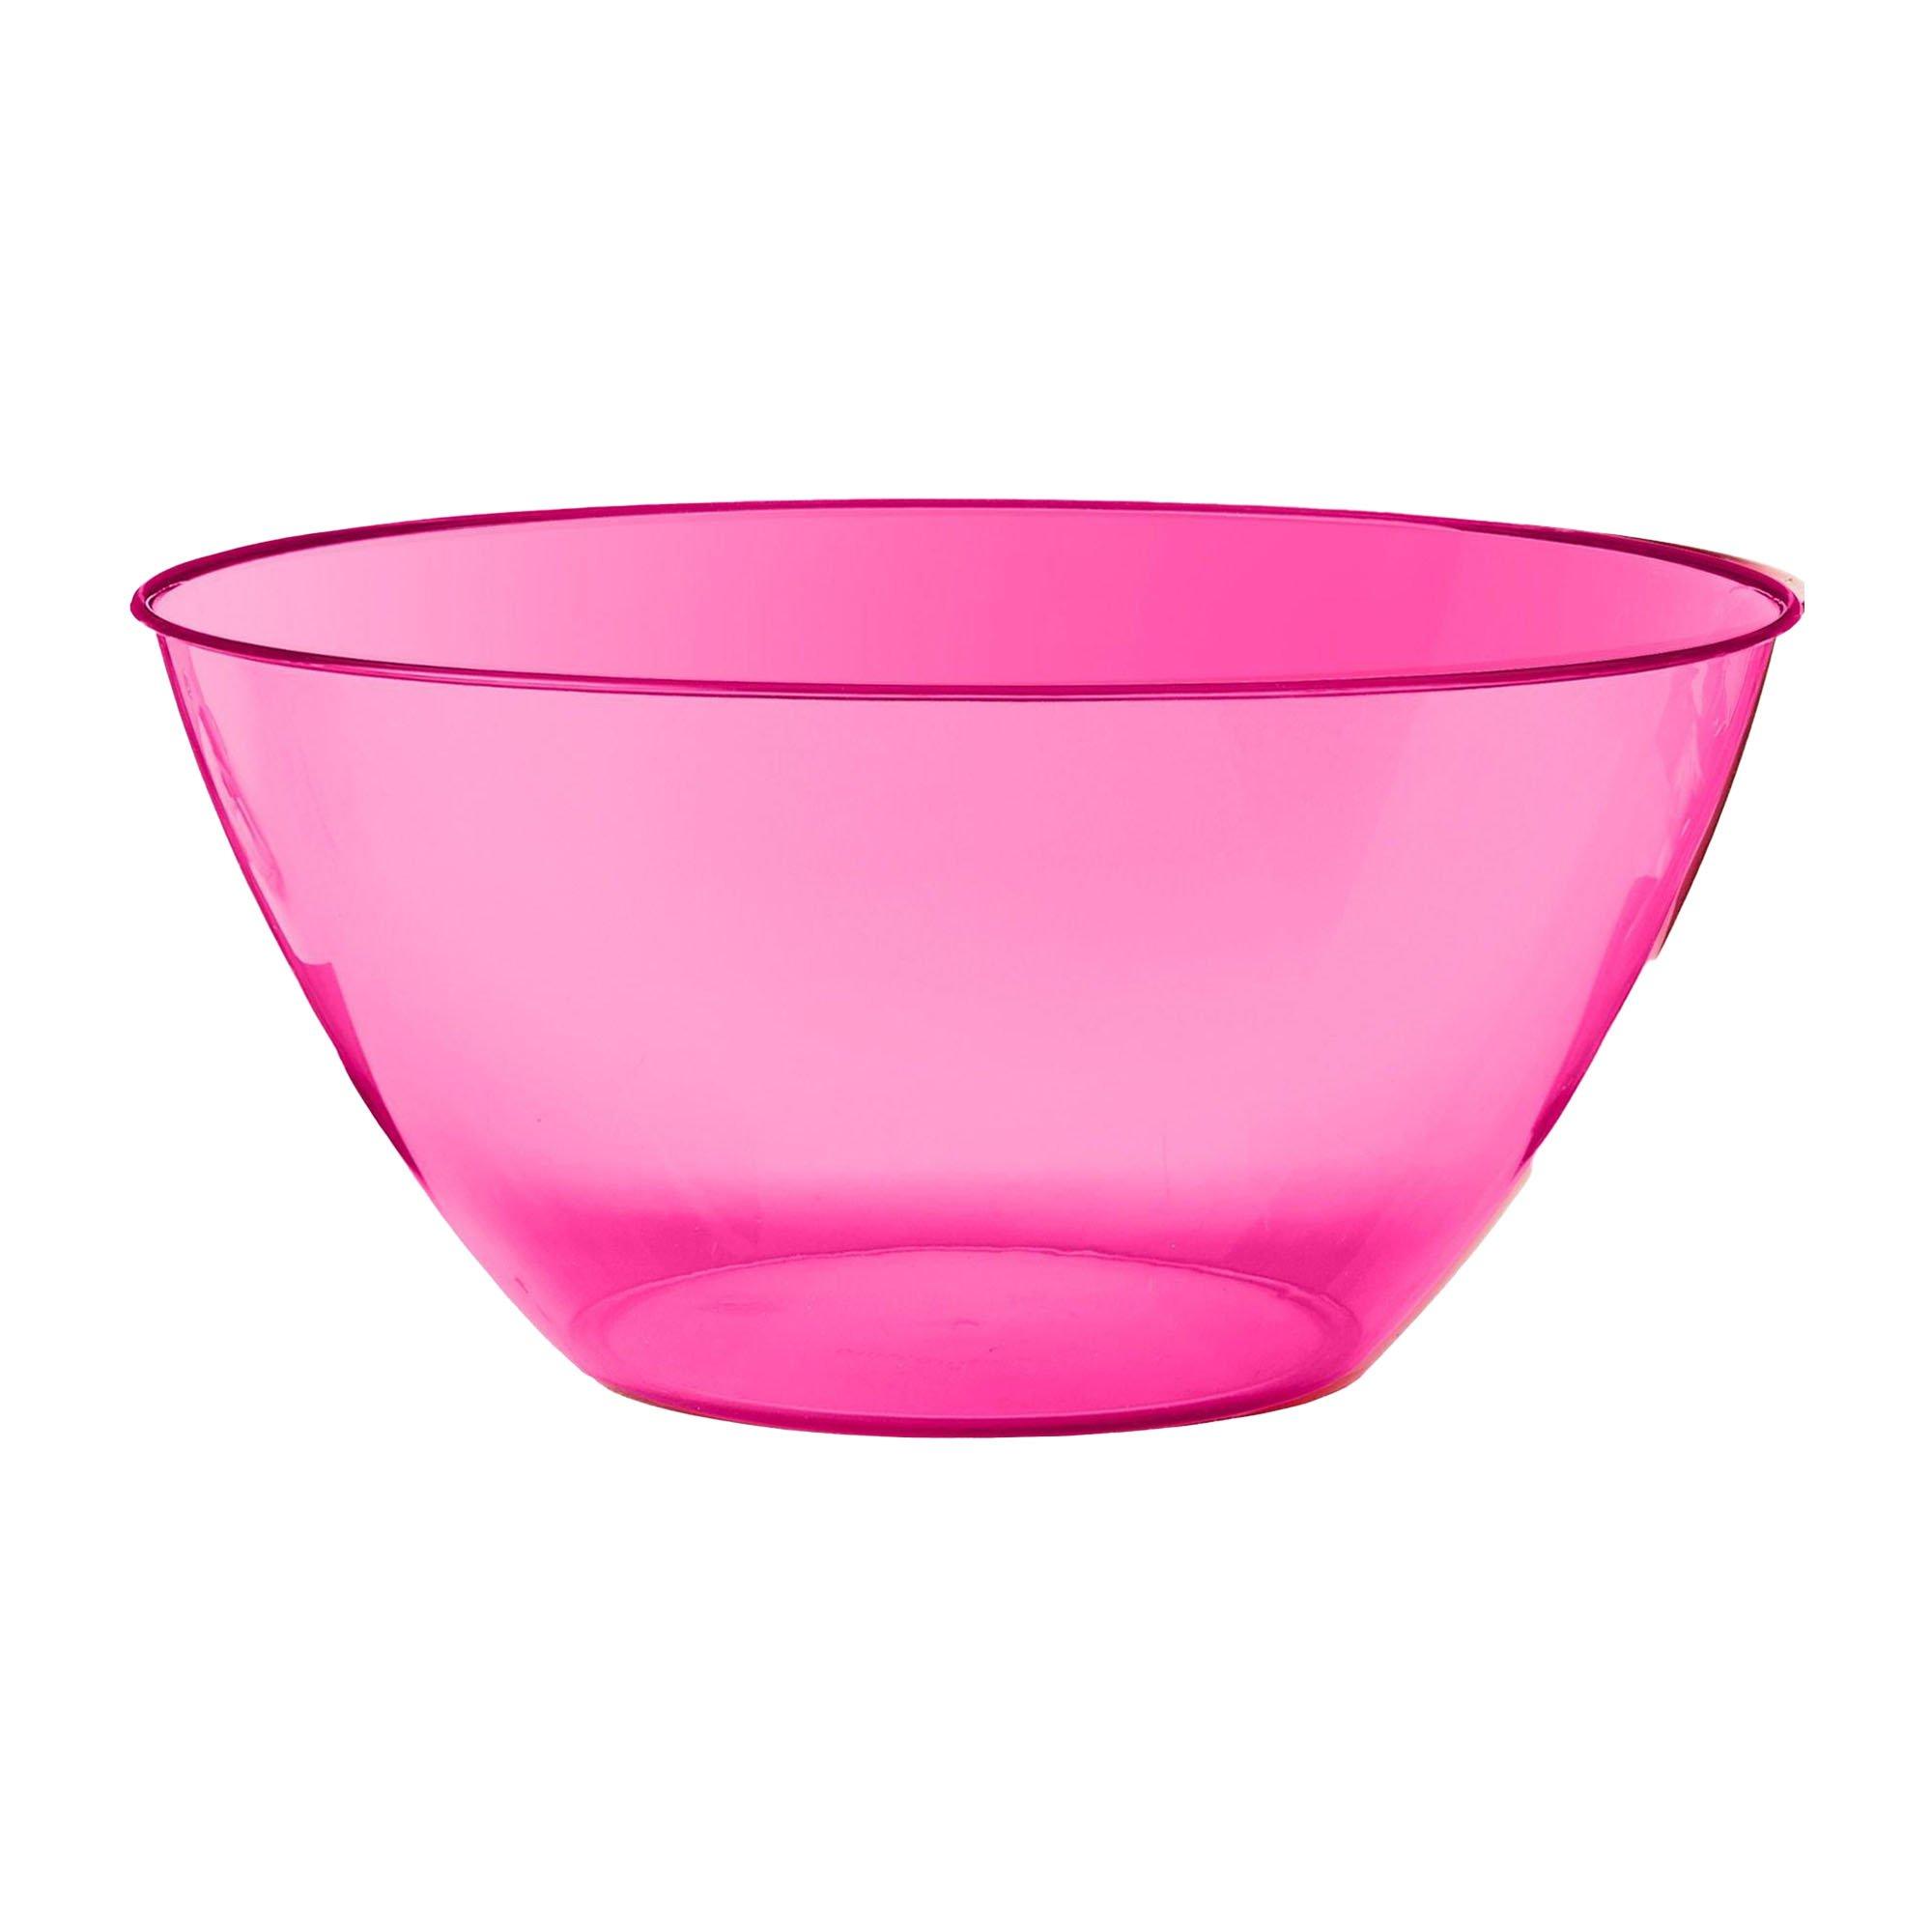 2 Qts.Bowl - Bright Pink